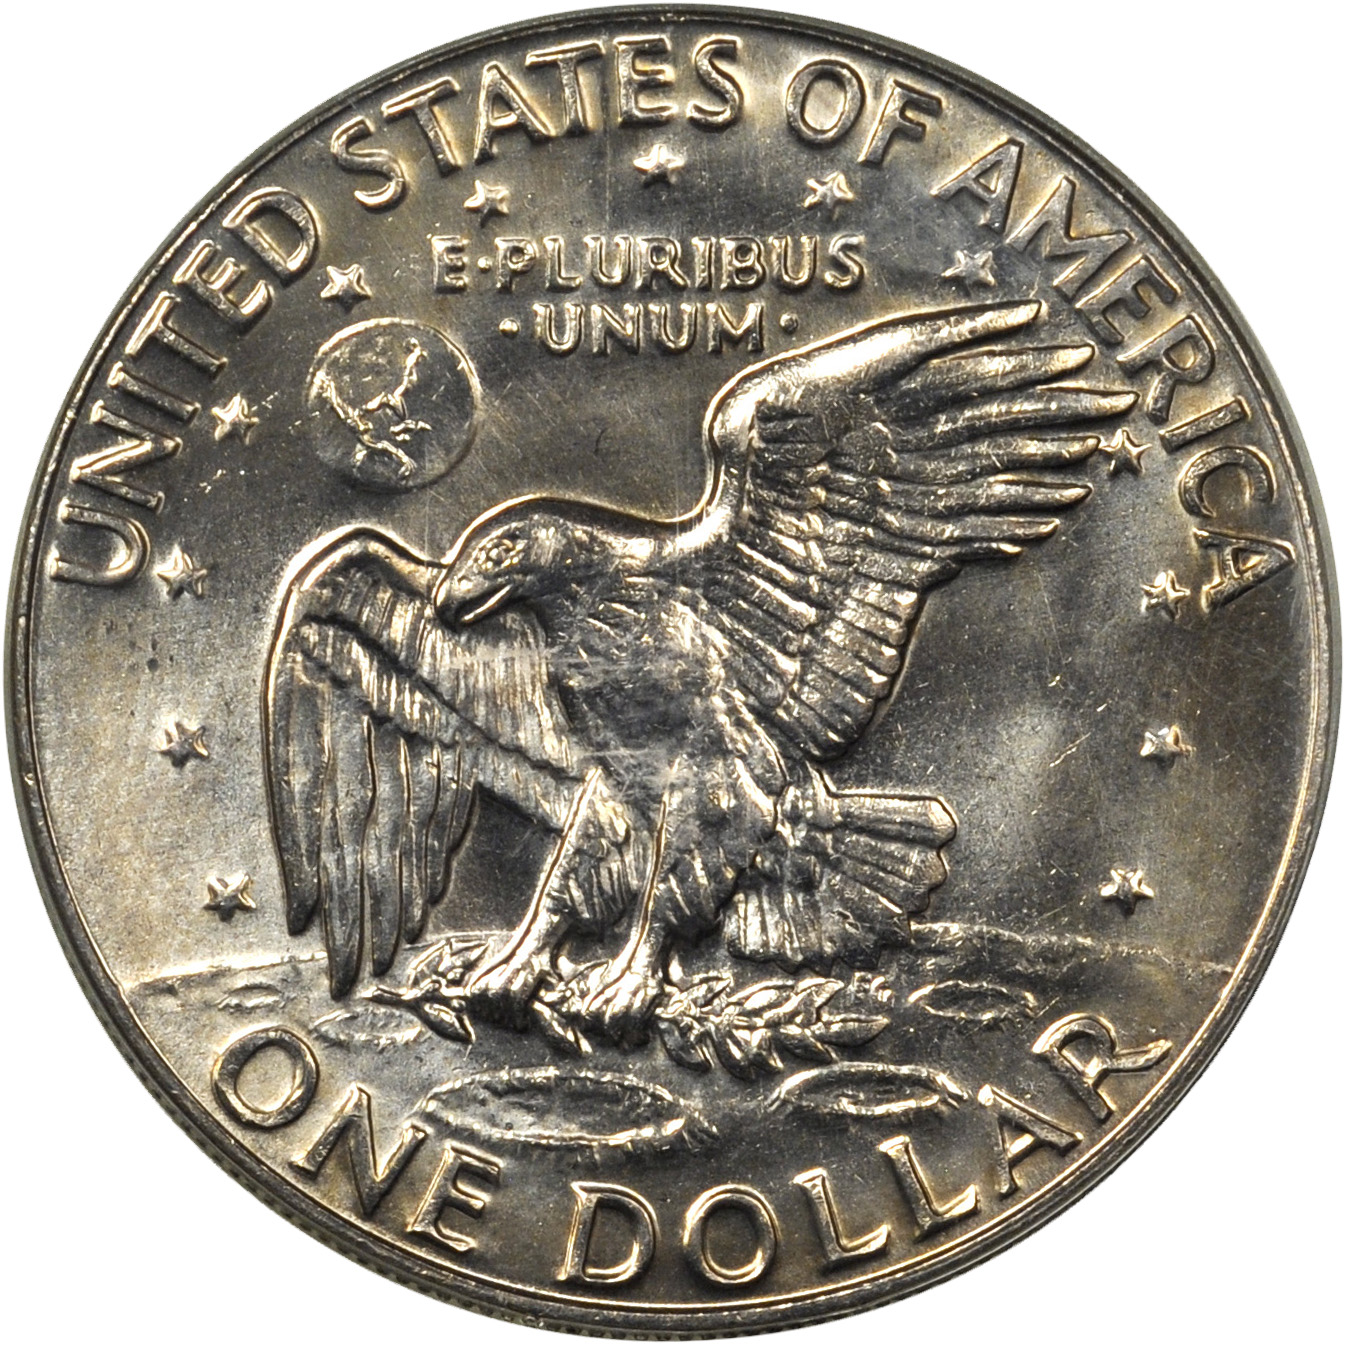 Value Of 1978 D Eisenhower Dollar Sell Modern Coins,Gluten Free Apple Pie